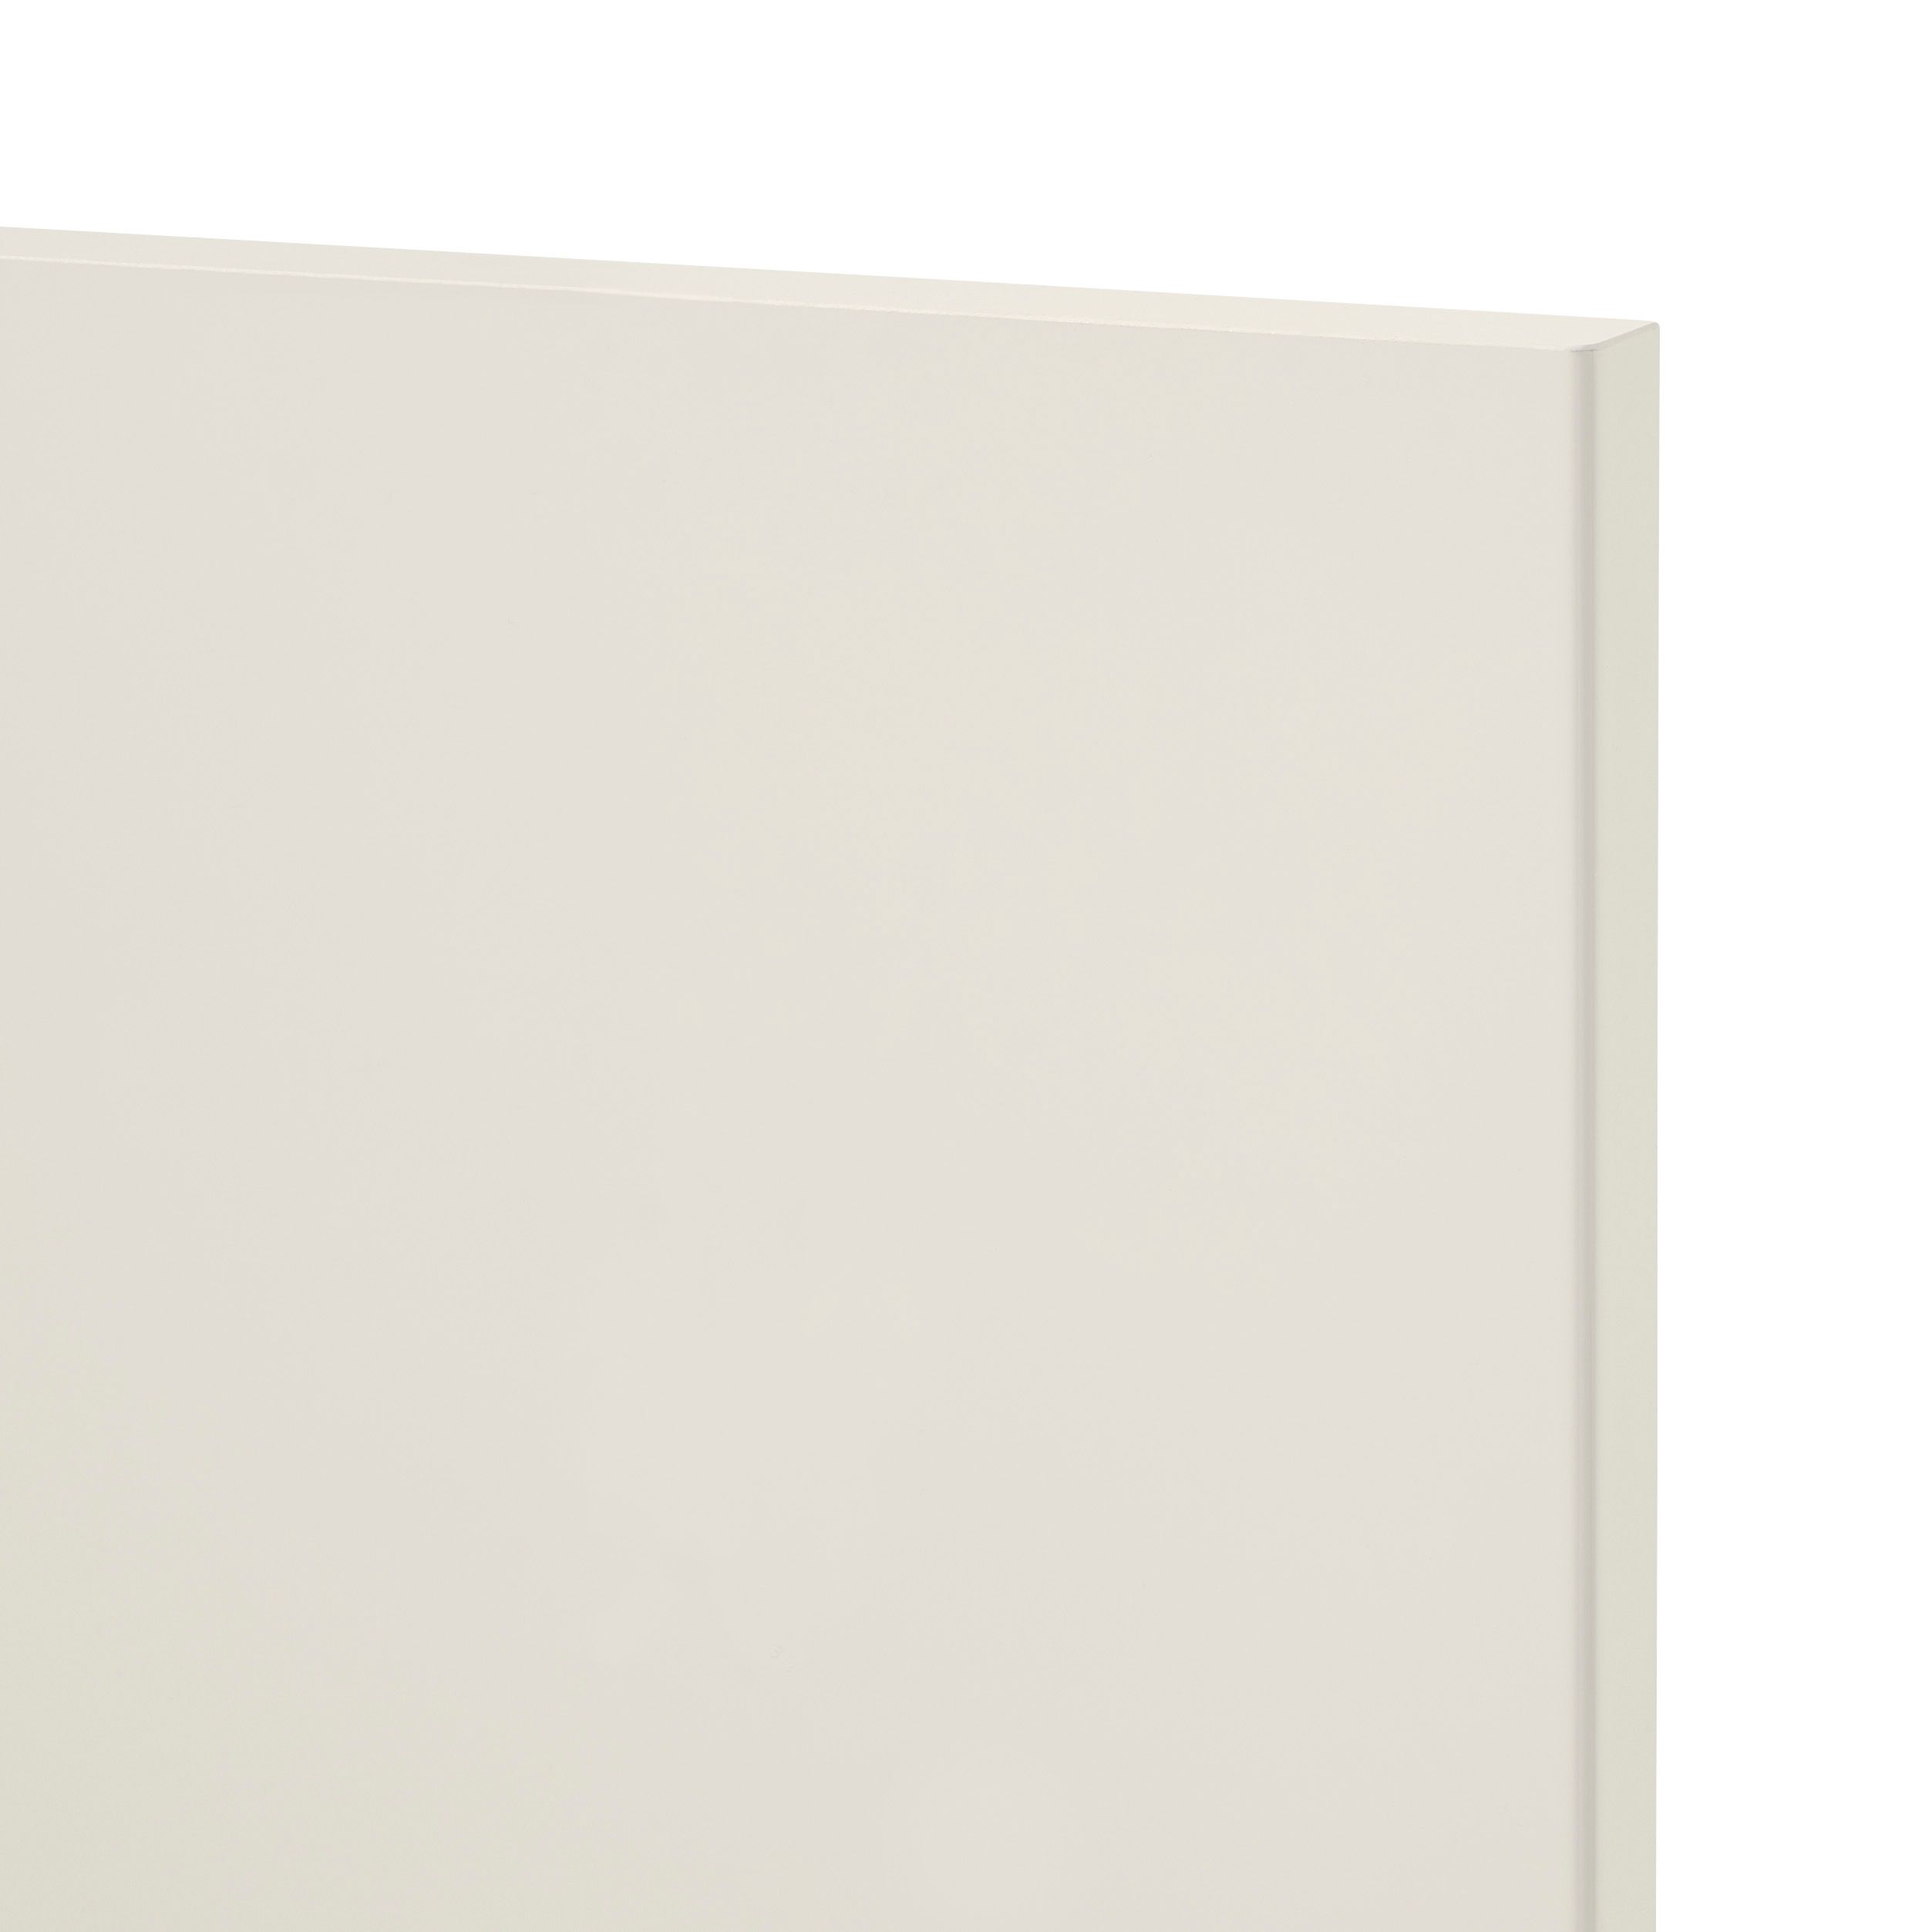 GoodHome Stevia Gloss cream slab Drawer front, bridging door & bi fold door, (W)400mm (H)356mm (T)18mm